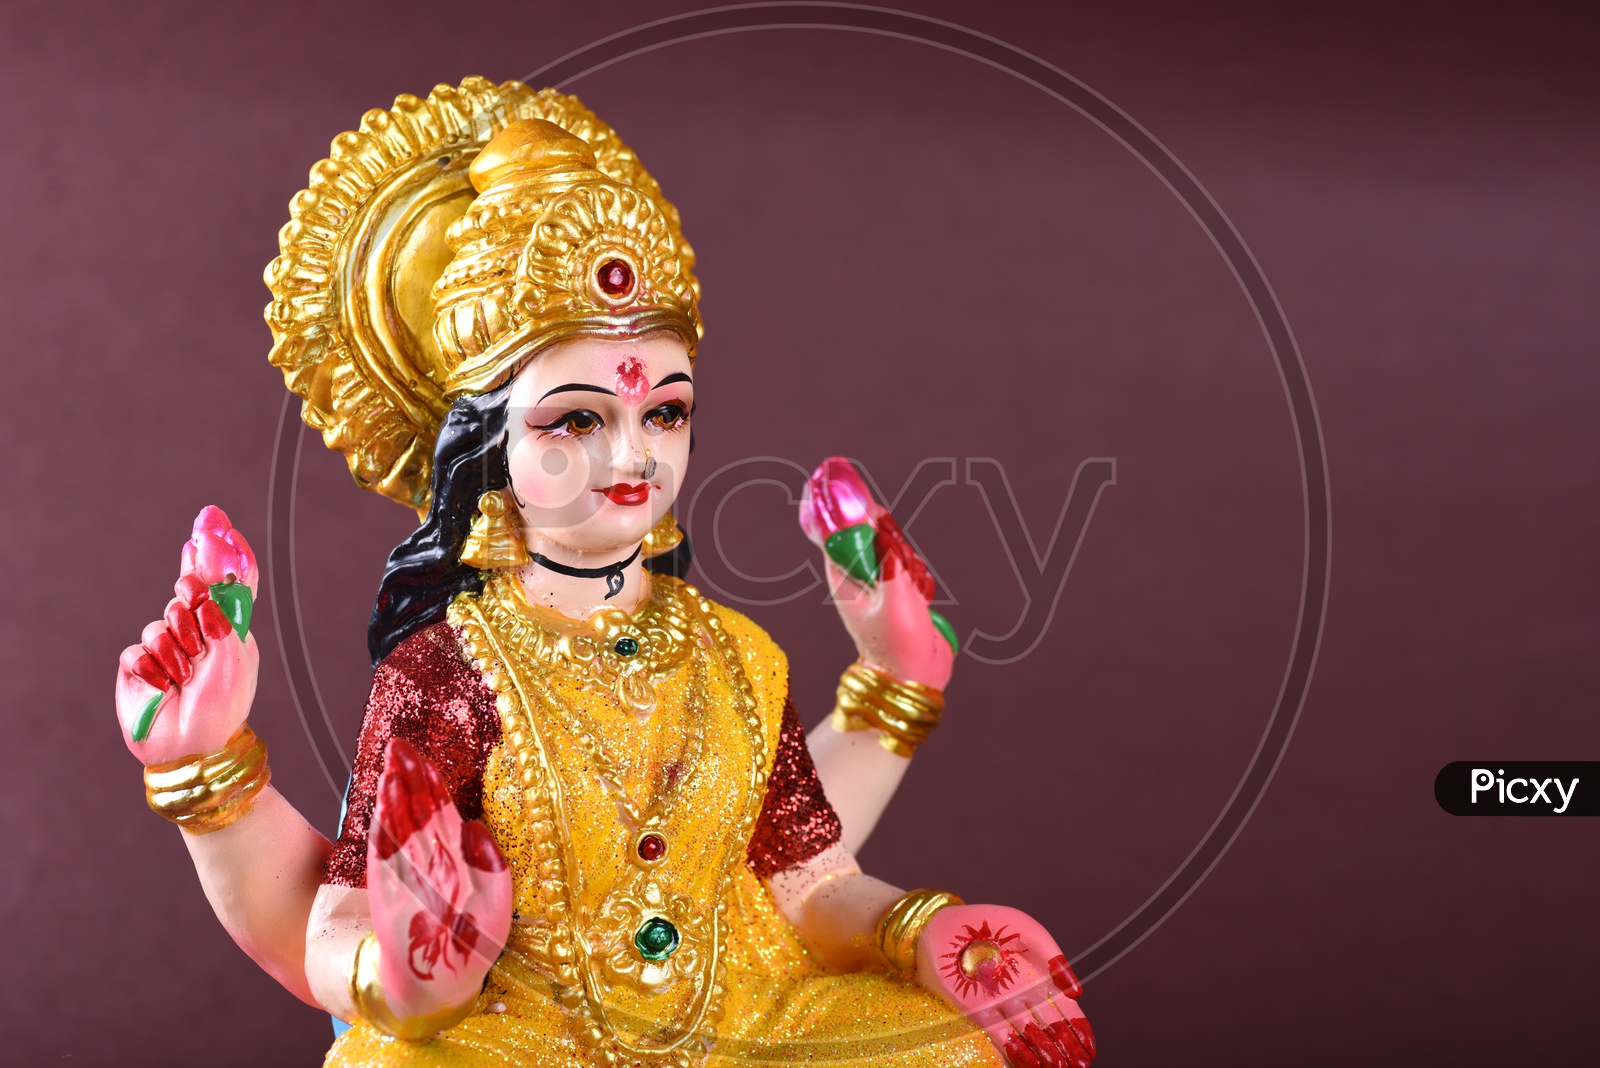 Indian Hindu Goddess Lakshmi Idols During Diwali Festival Worships and Celebrations on an Isolated Background